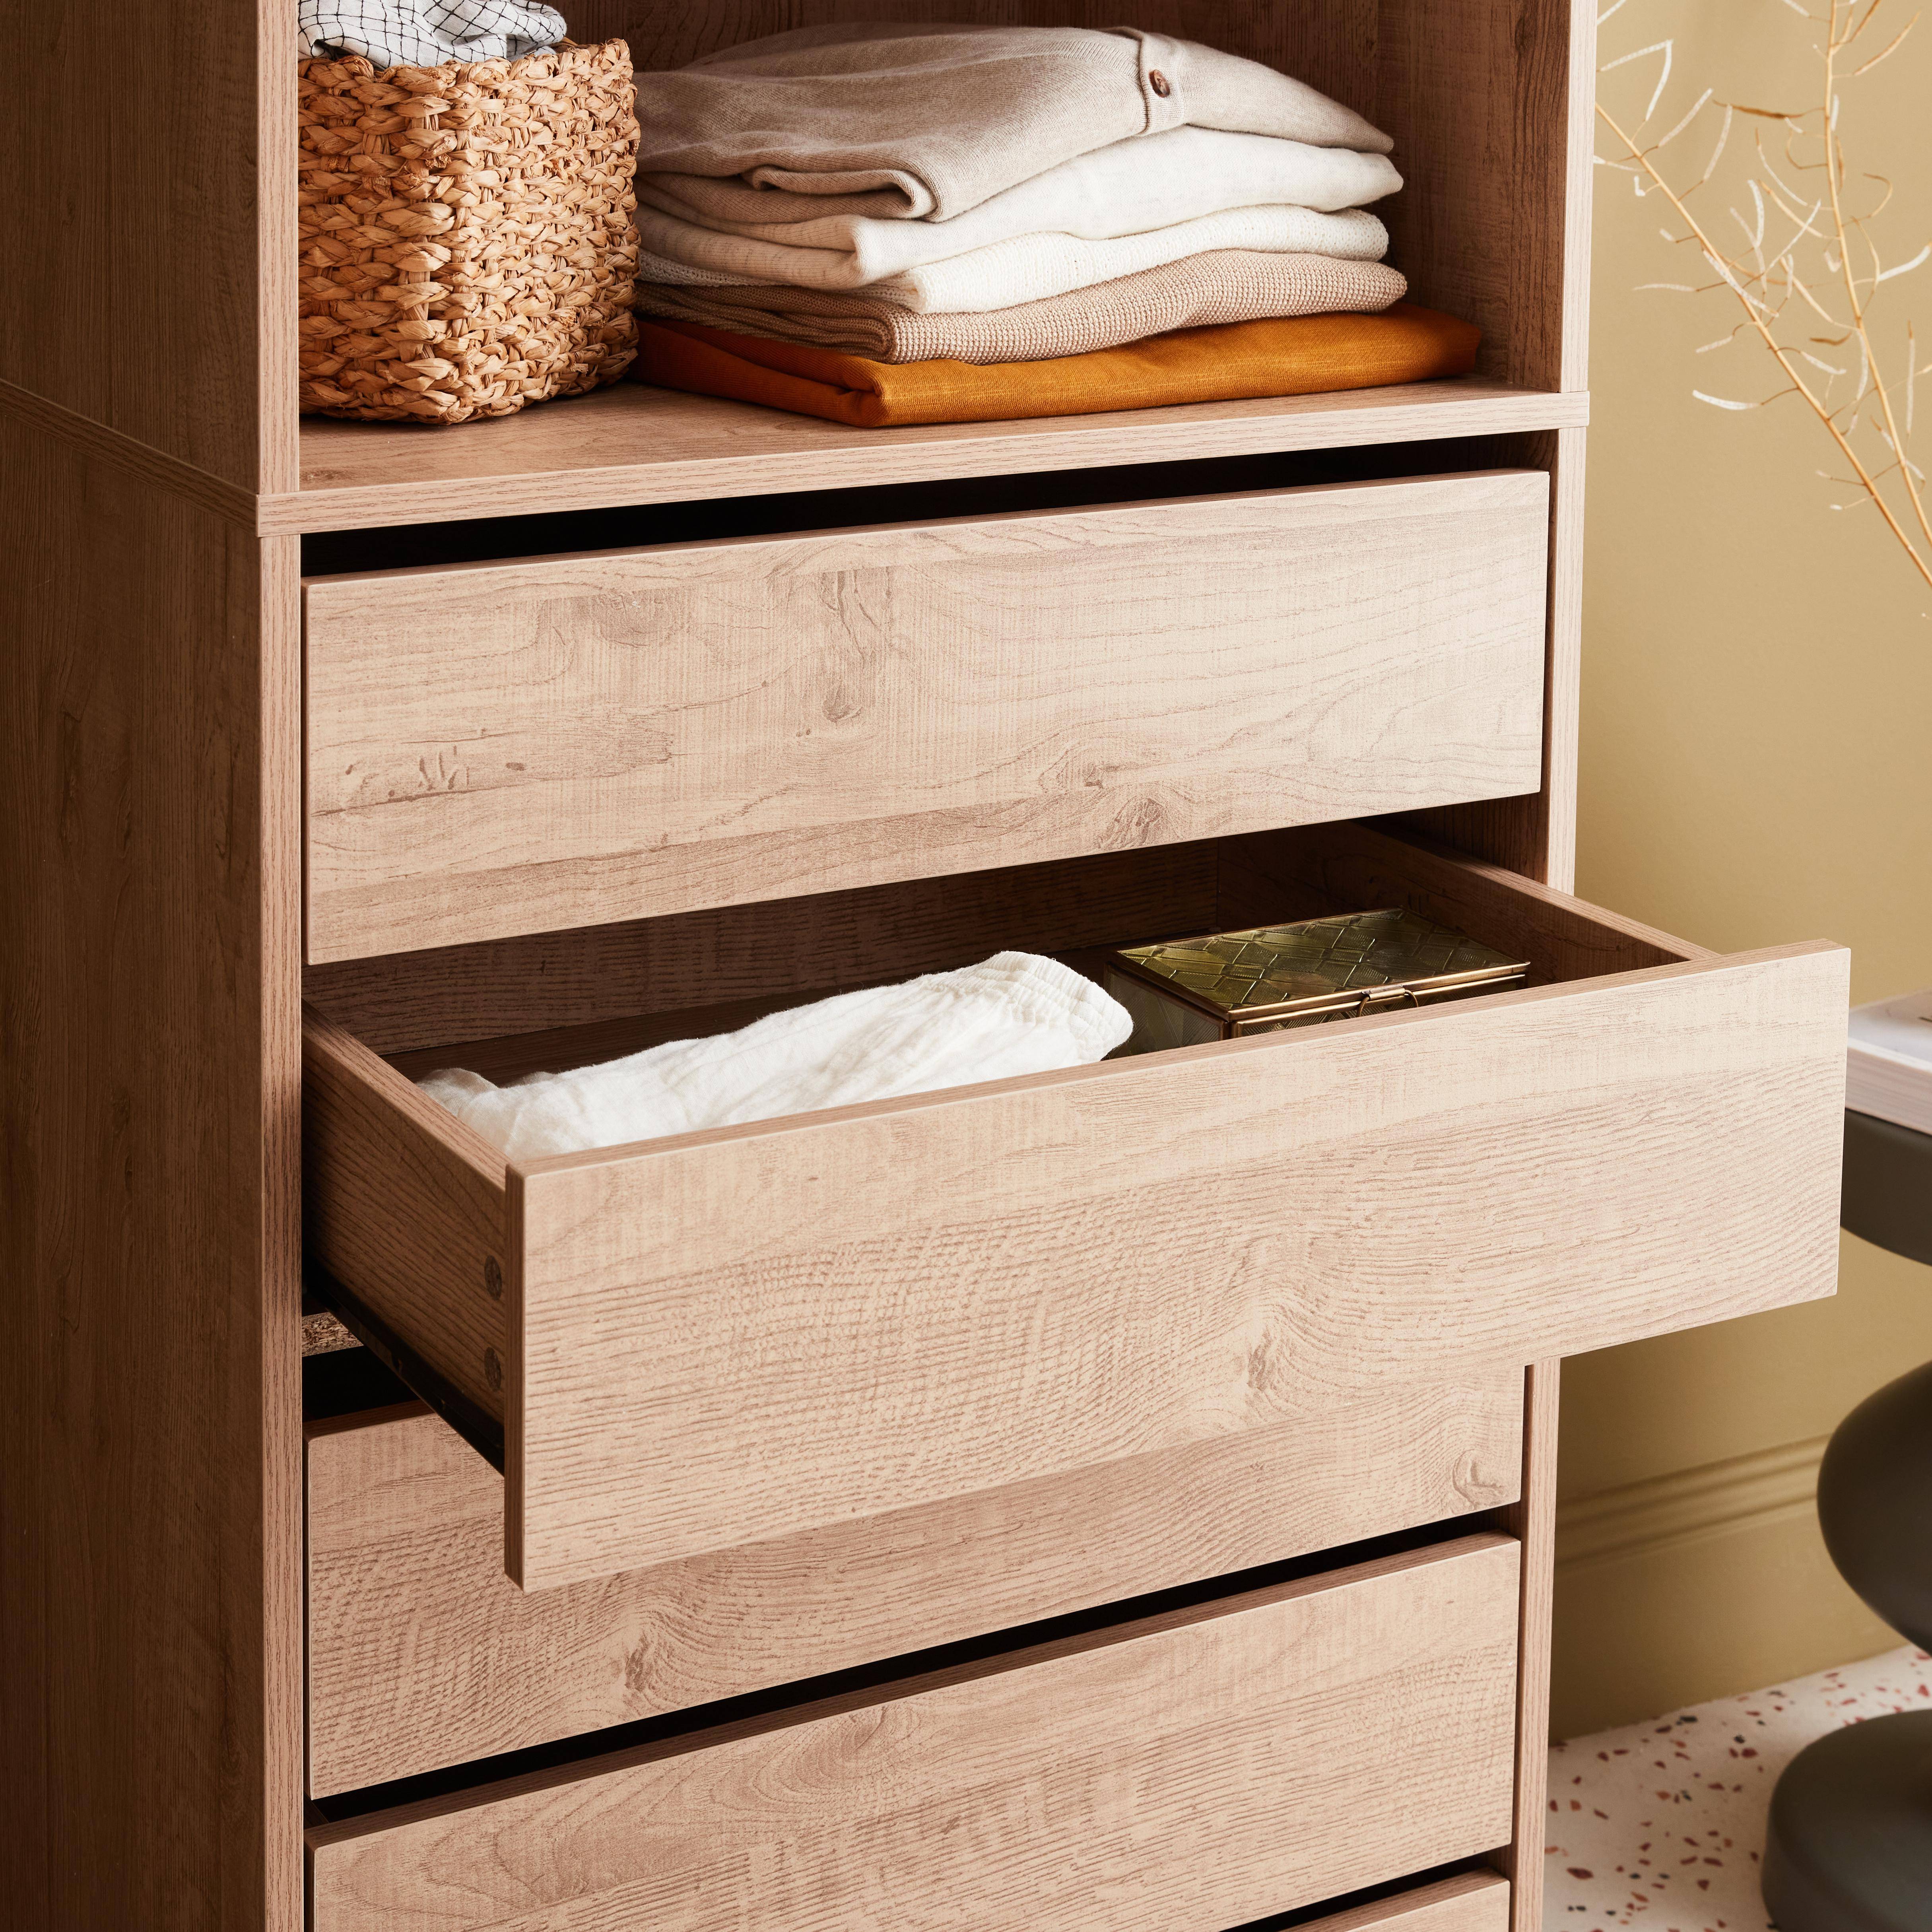 Modular open wardrobe drawer and shelf unit, 60x45x180cm, Modulo, 5 drawers, 2 shelves, Natural,sweeek,Photo2